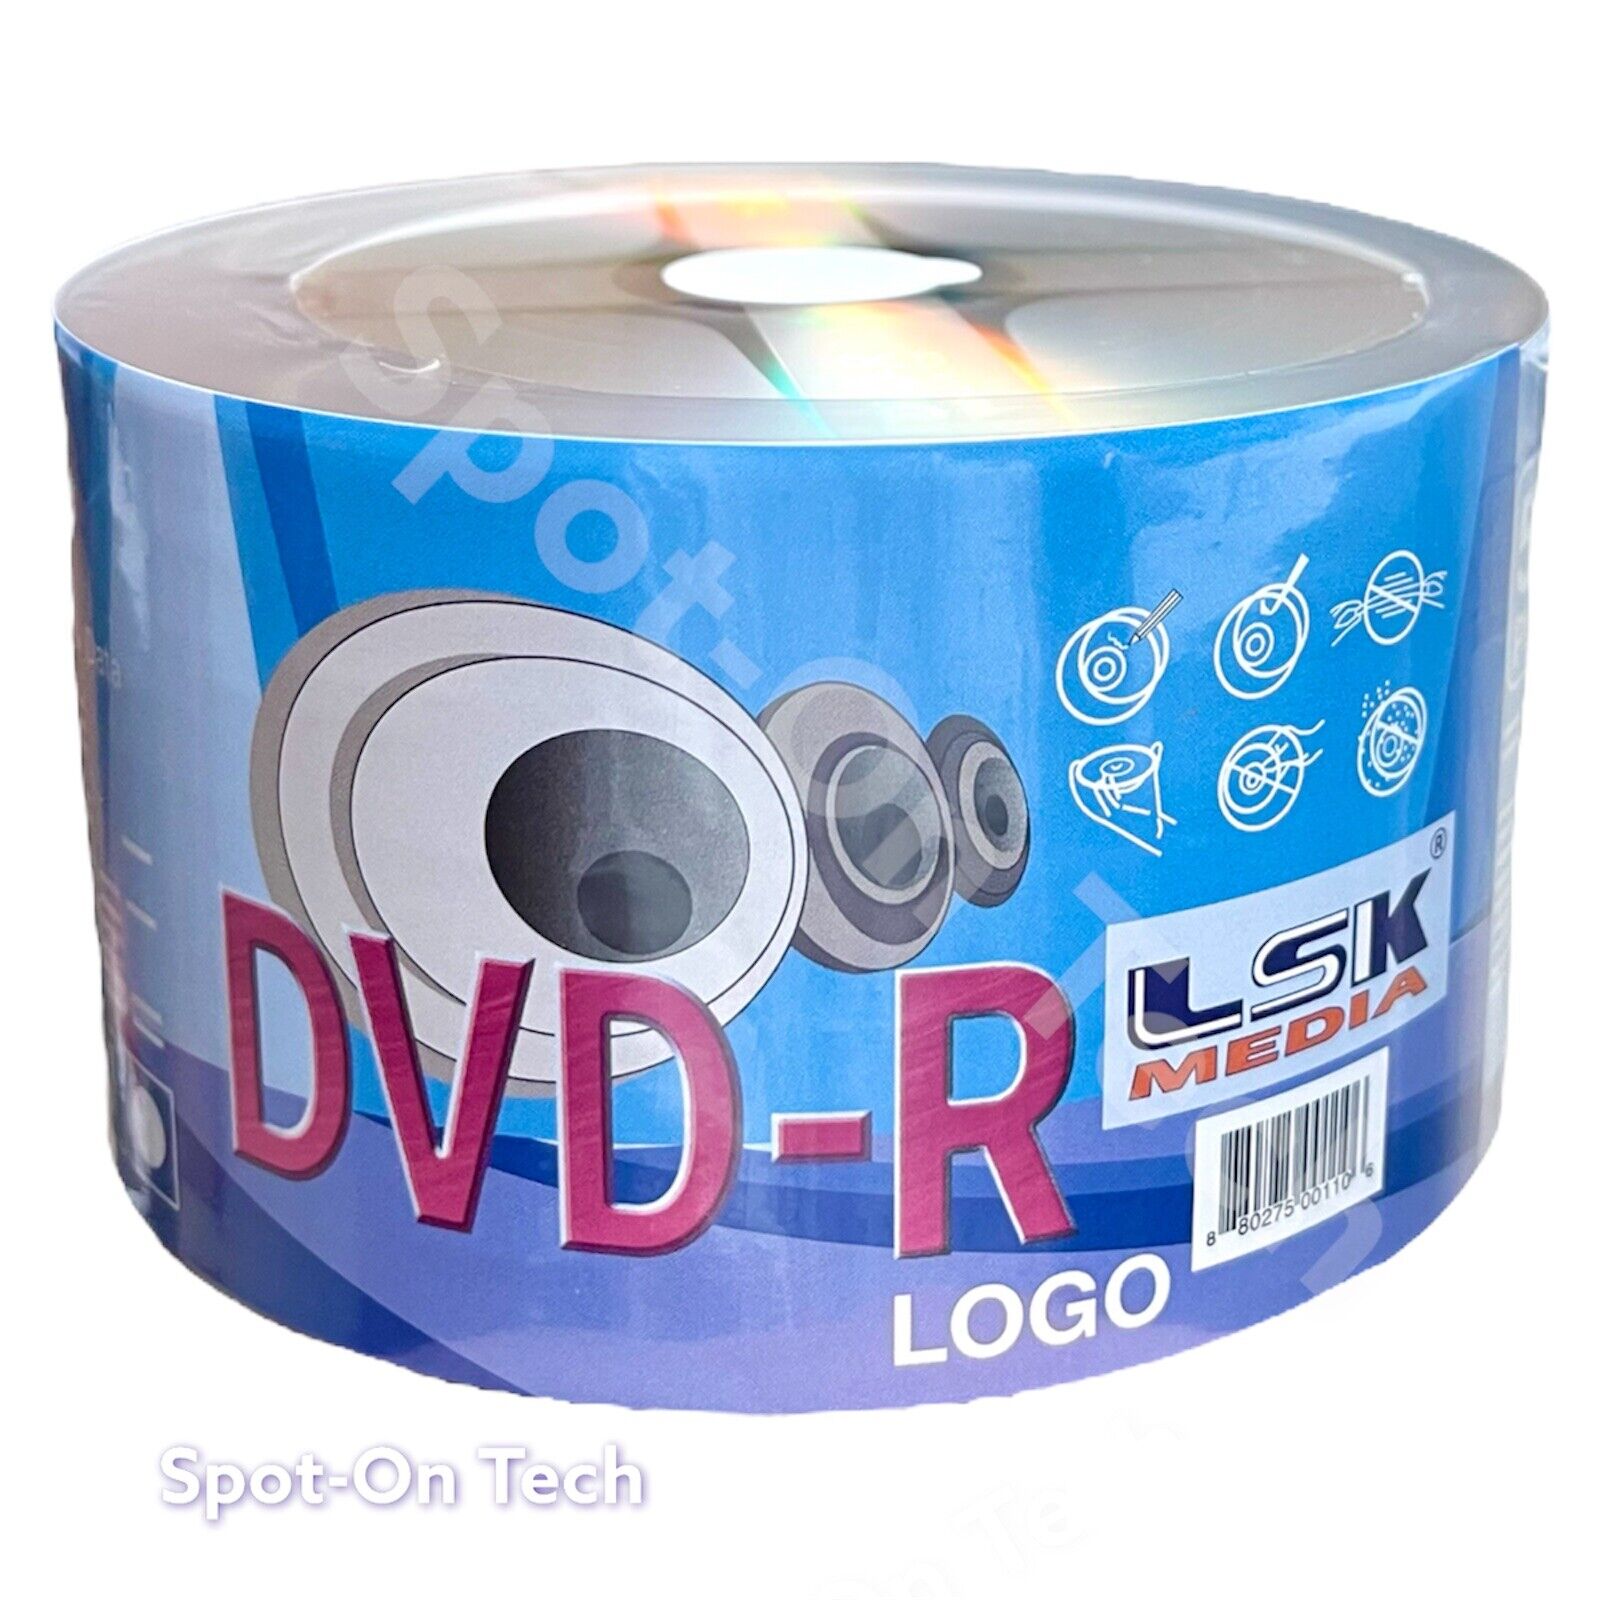 100 LSK MEDIA DVD DVD-R LOGO Blank Disc 16X 4.7GB/120Min Duplication Grade - 2pk